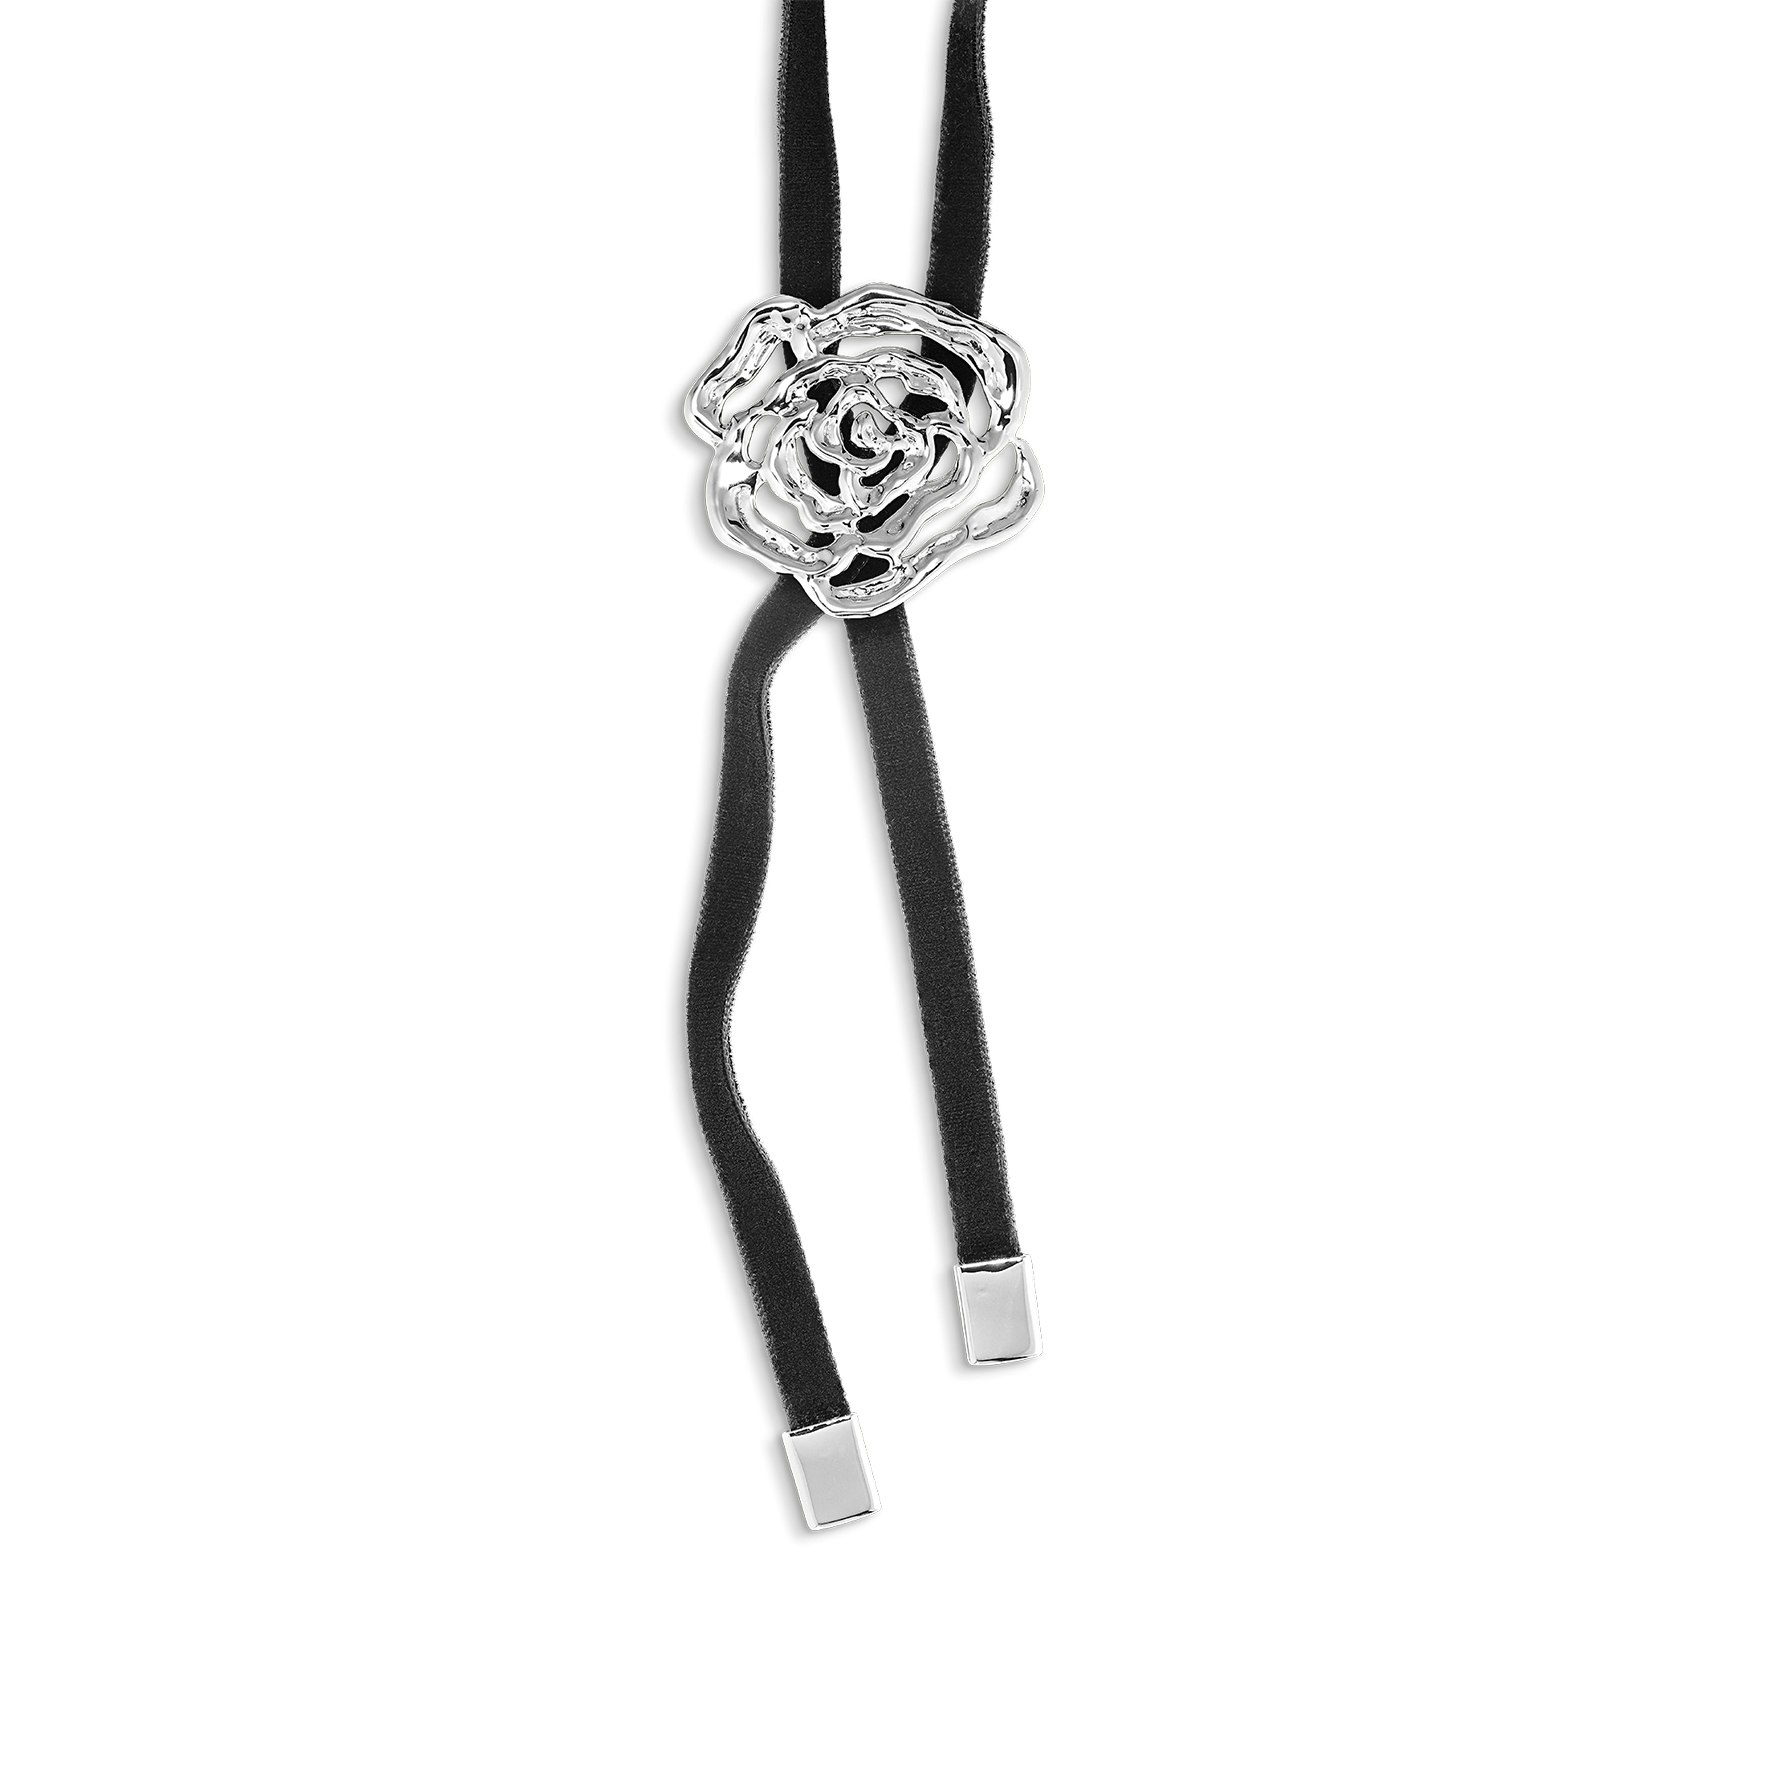 Rosle Bolo Tie Necklace von Jane Kønig in Vergoldet-Silber Sterling 925